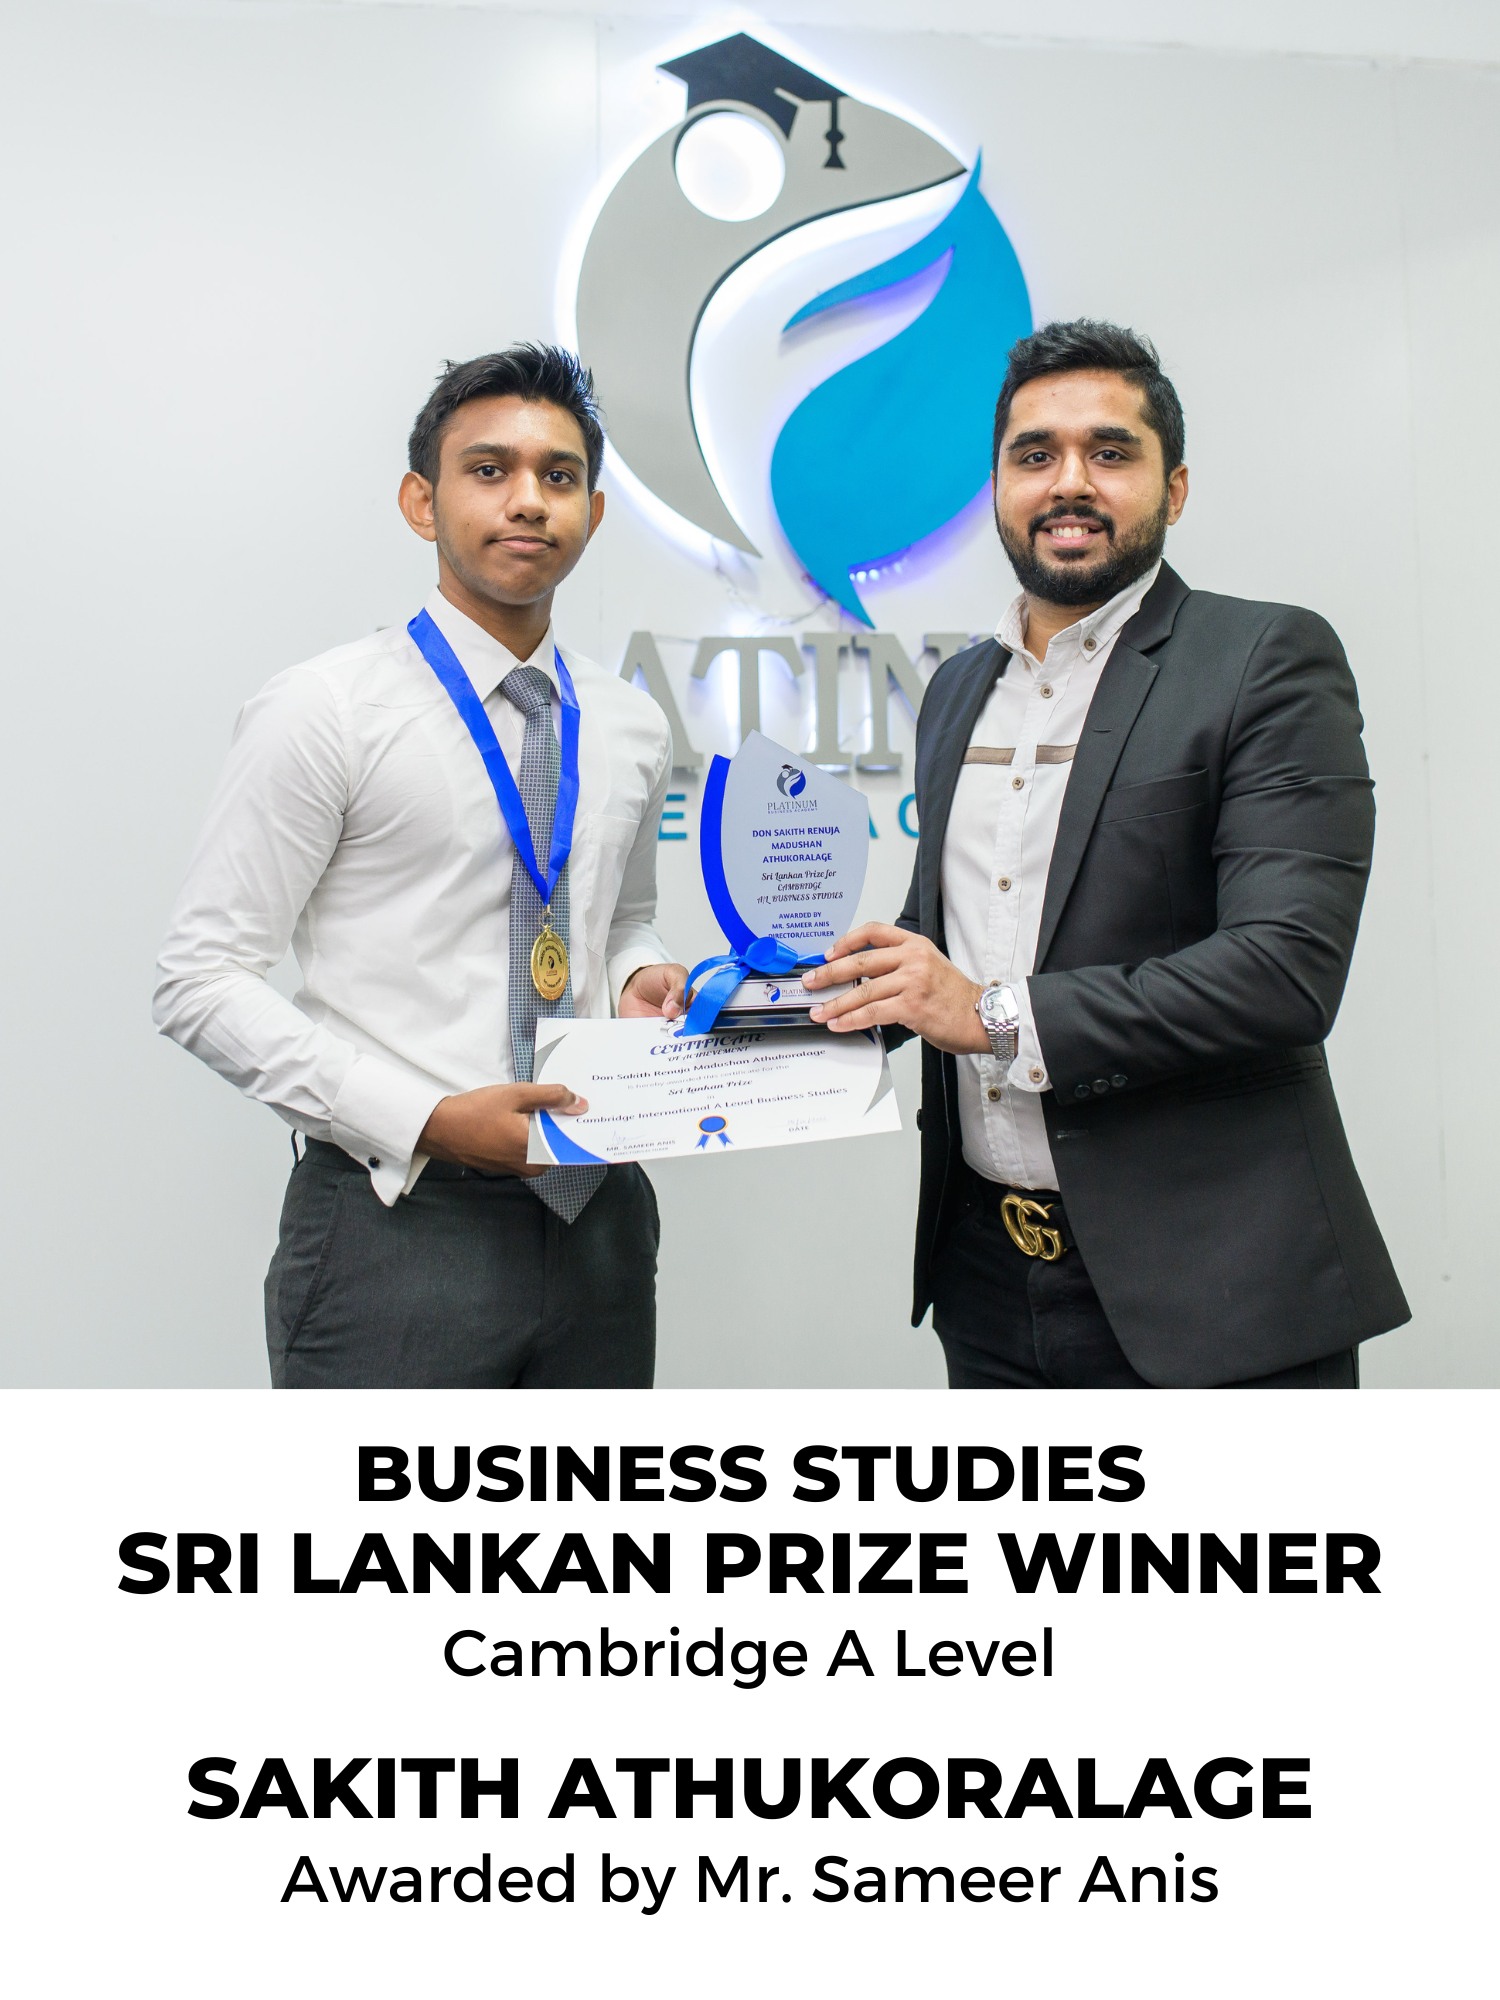 Cambridge A Level Business Studies Sri Lankan Prize Winner: Sakith Athukoralage
Lecturer: Mr. Sameer Anis